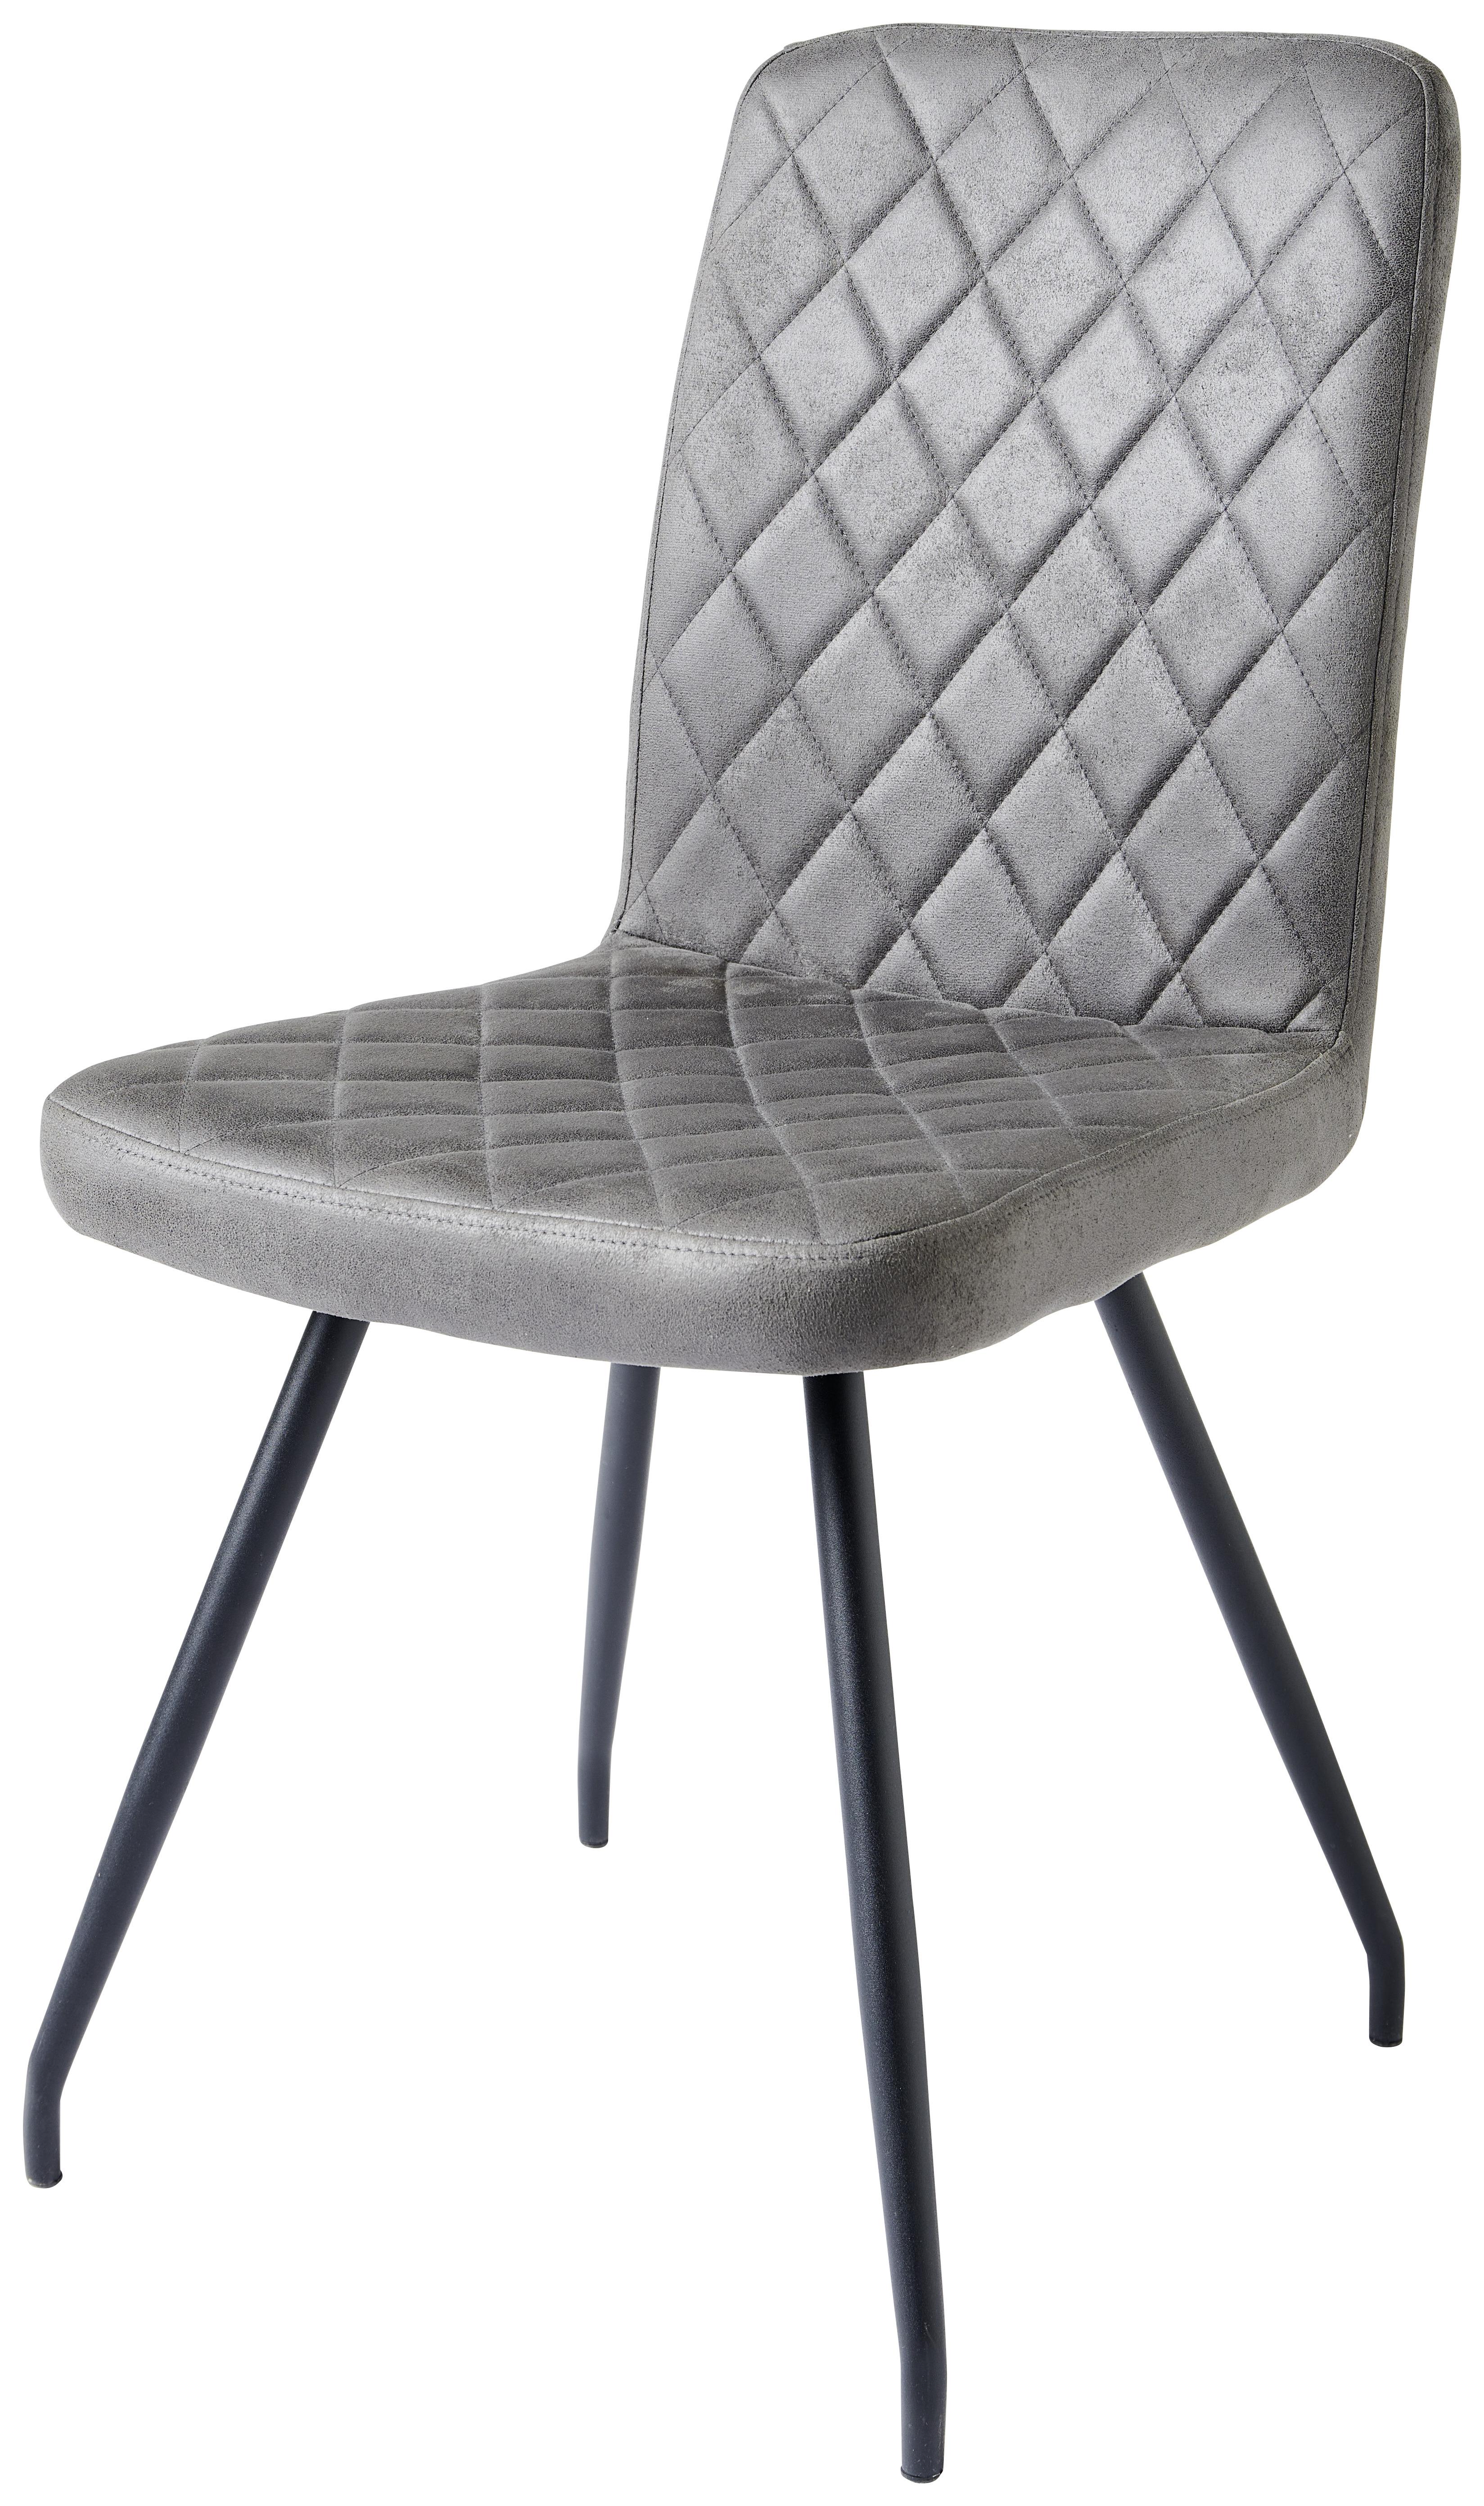 Čtyřnohá Židle Mia - šedá/černá, Konvenční, kov/textil (42/91/62cm)